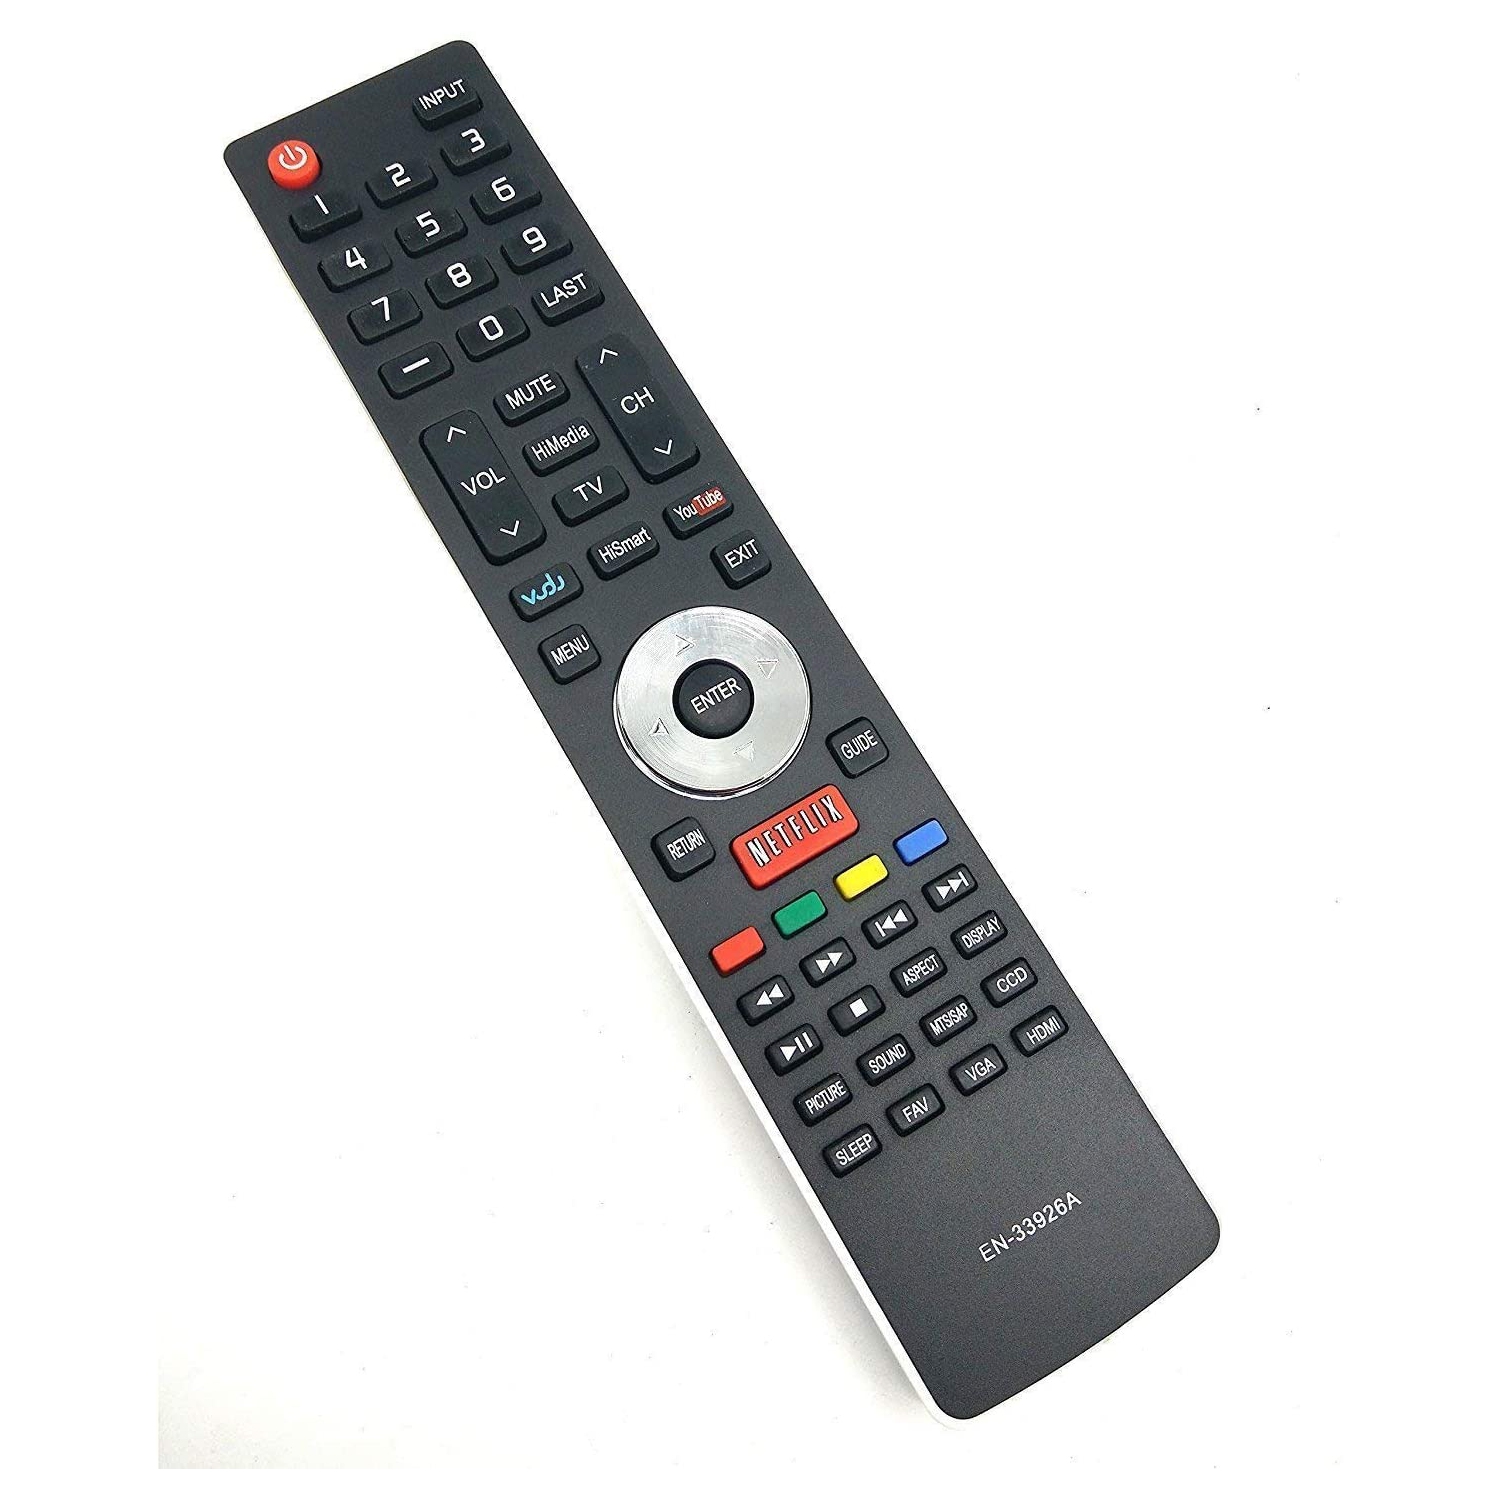 EN-33926A Remote Control Compatible with Hisense Smart TV